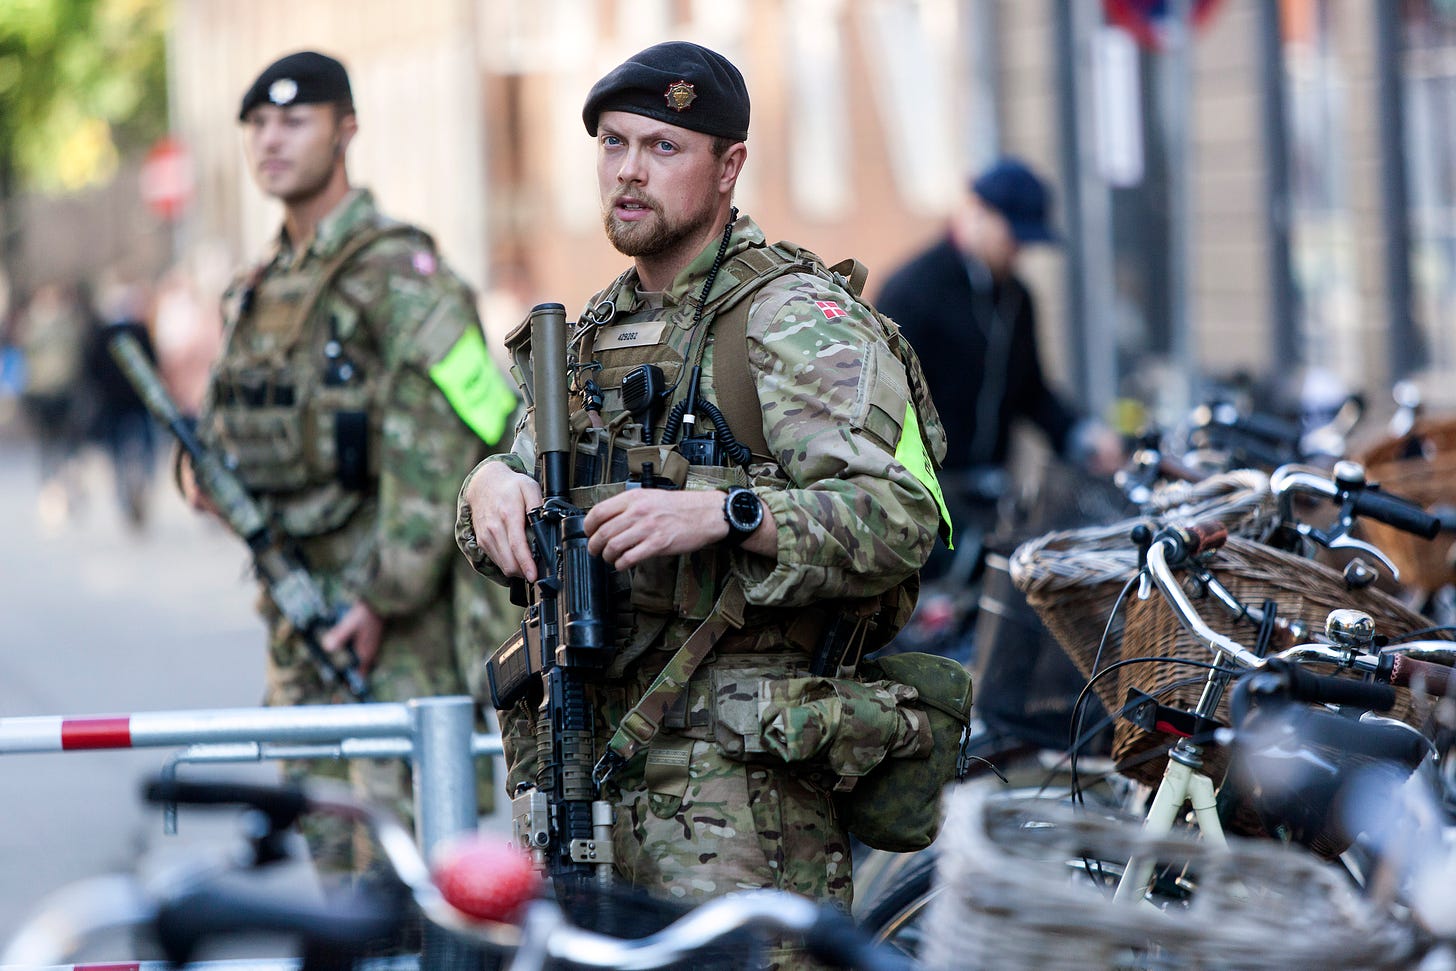 Danish, German and Dutch cops have arrested seven men suspected of plotting a terror plot across Europe